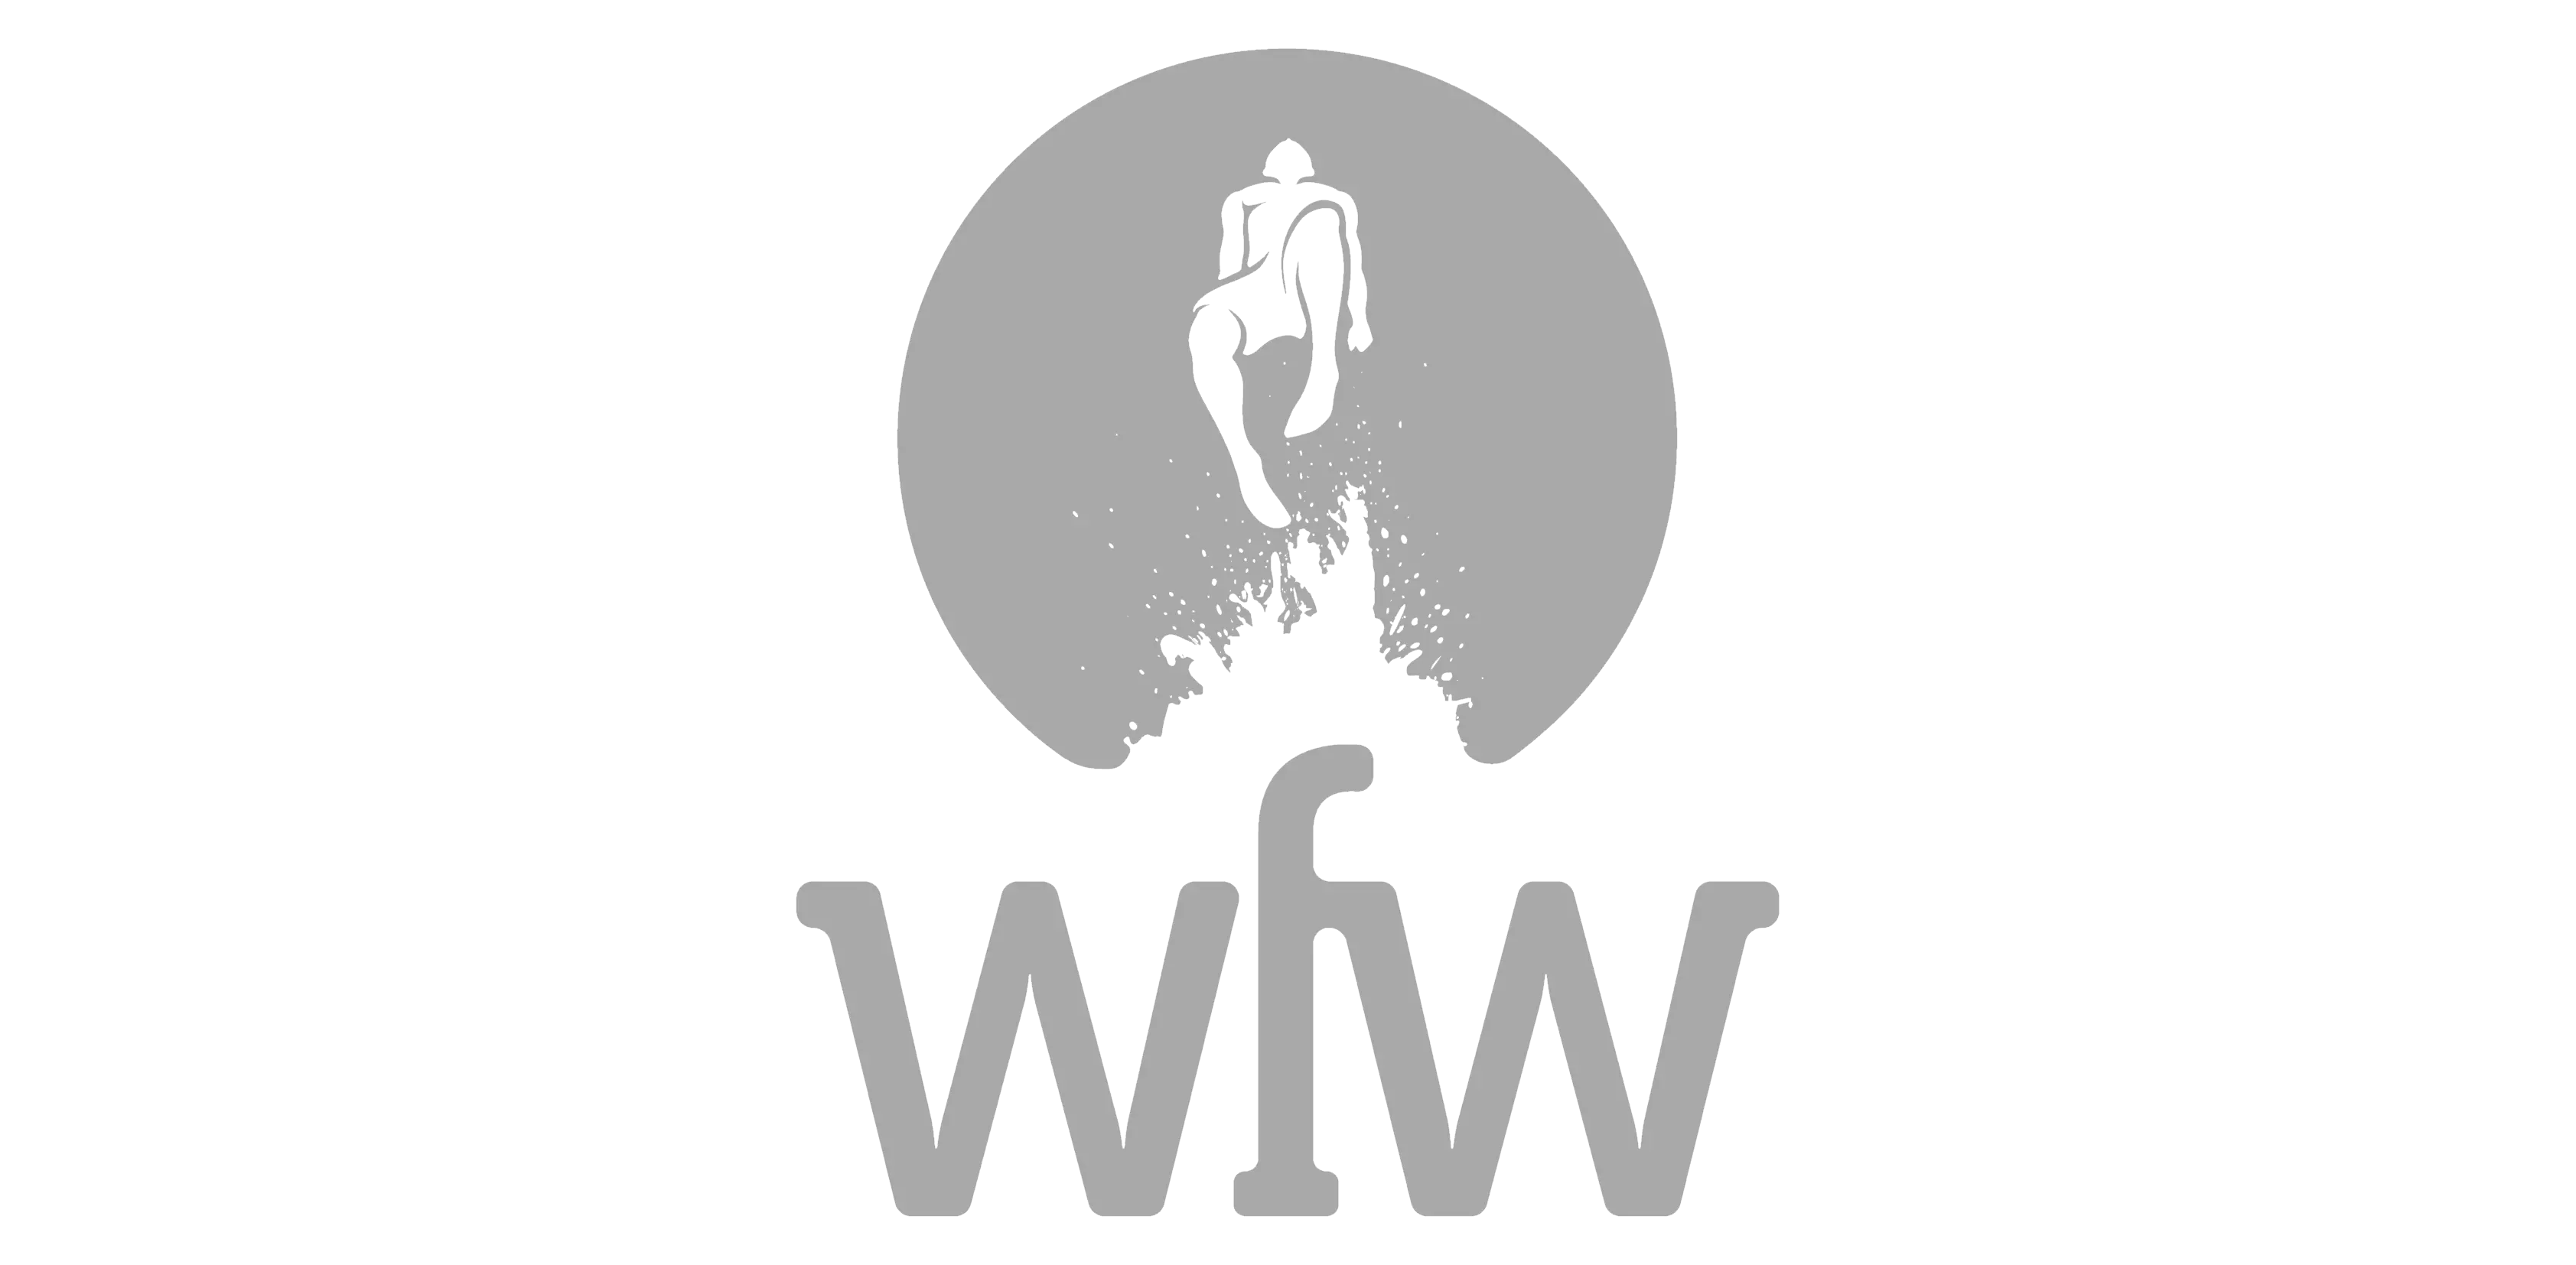 Hermitage nachhaltigkeit logo wfw